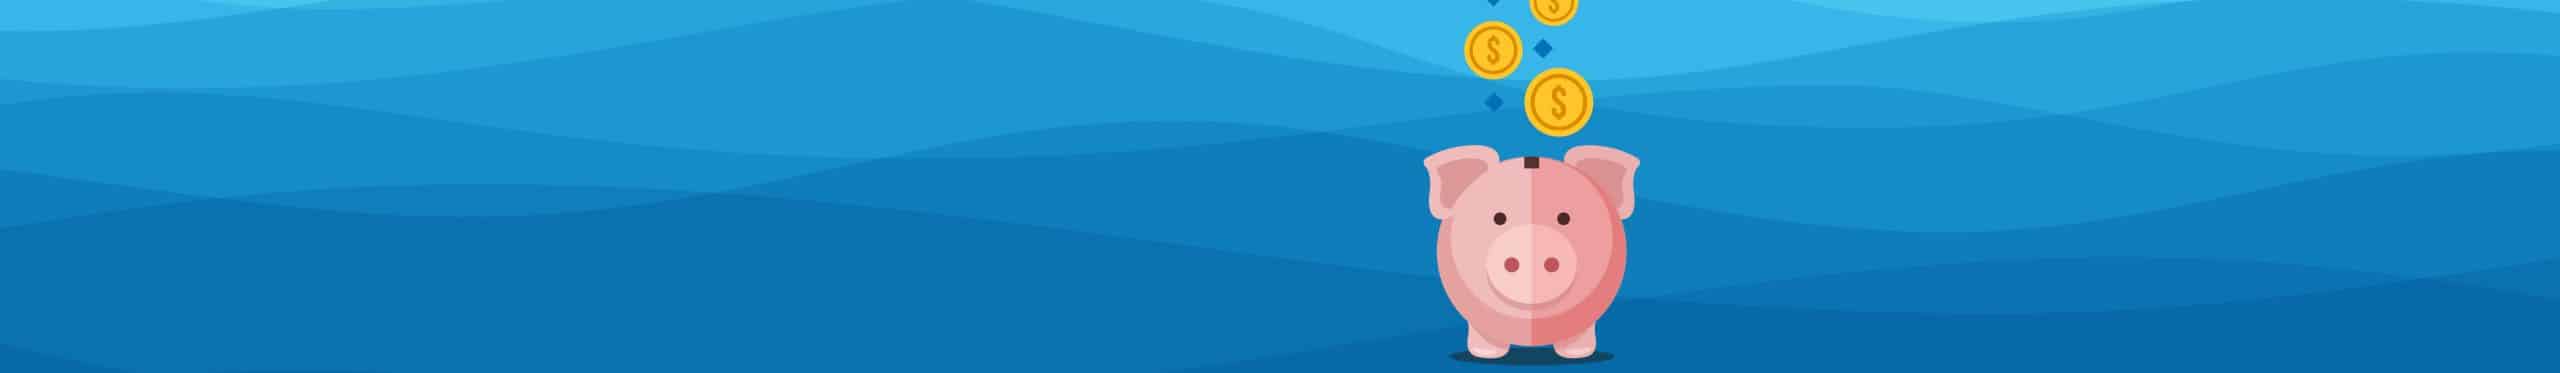 Saving piggy bank